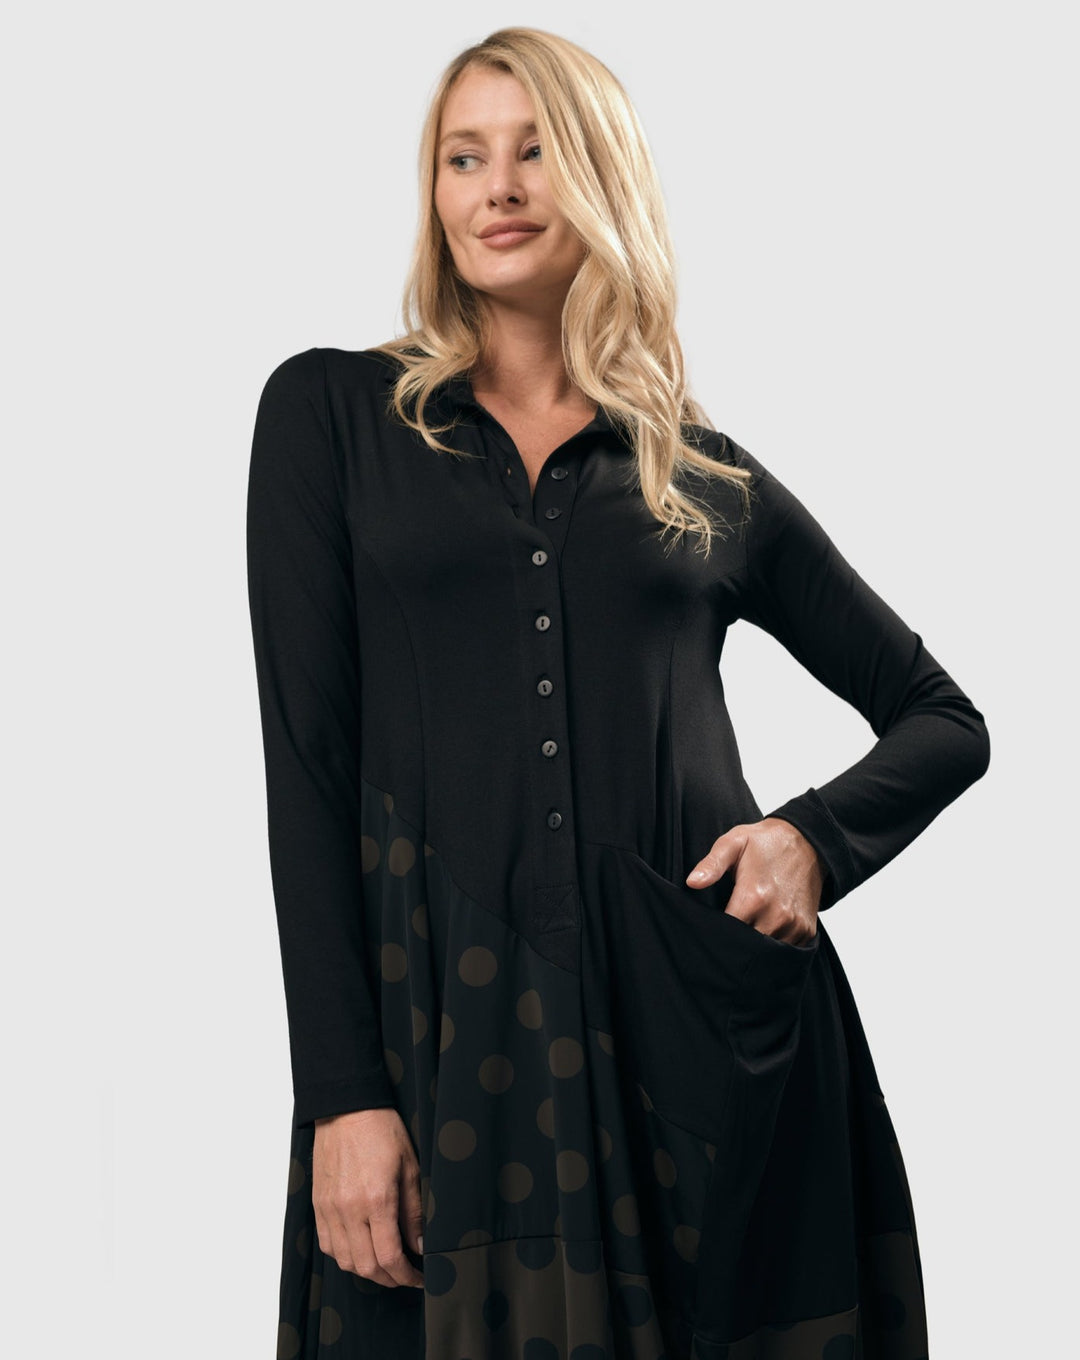 Tekbika Dot Wonderful Dress, Black/Khaki